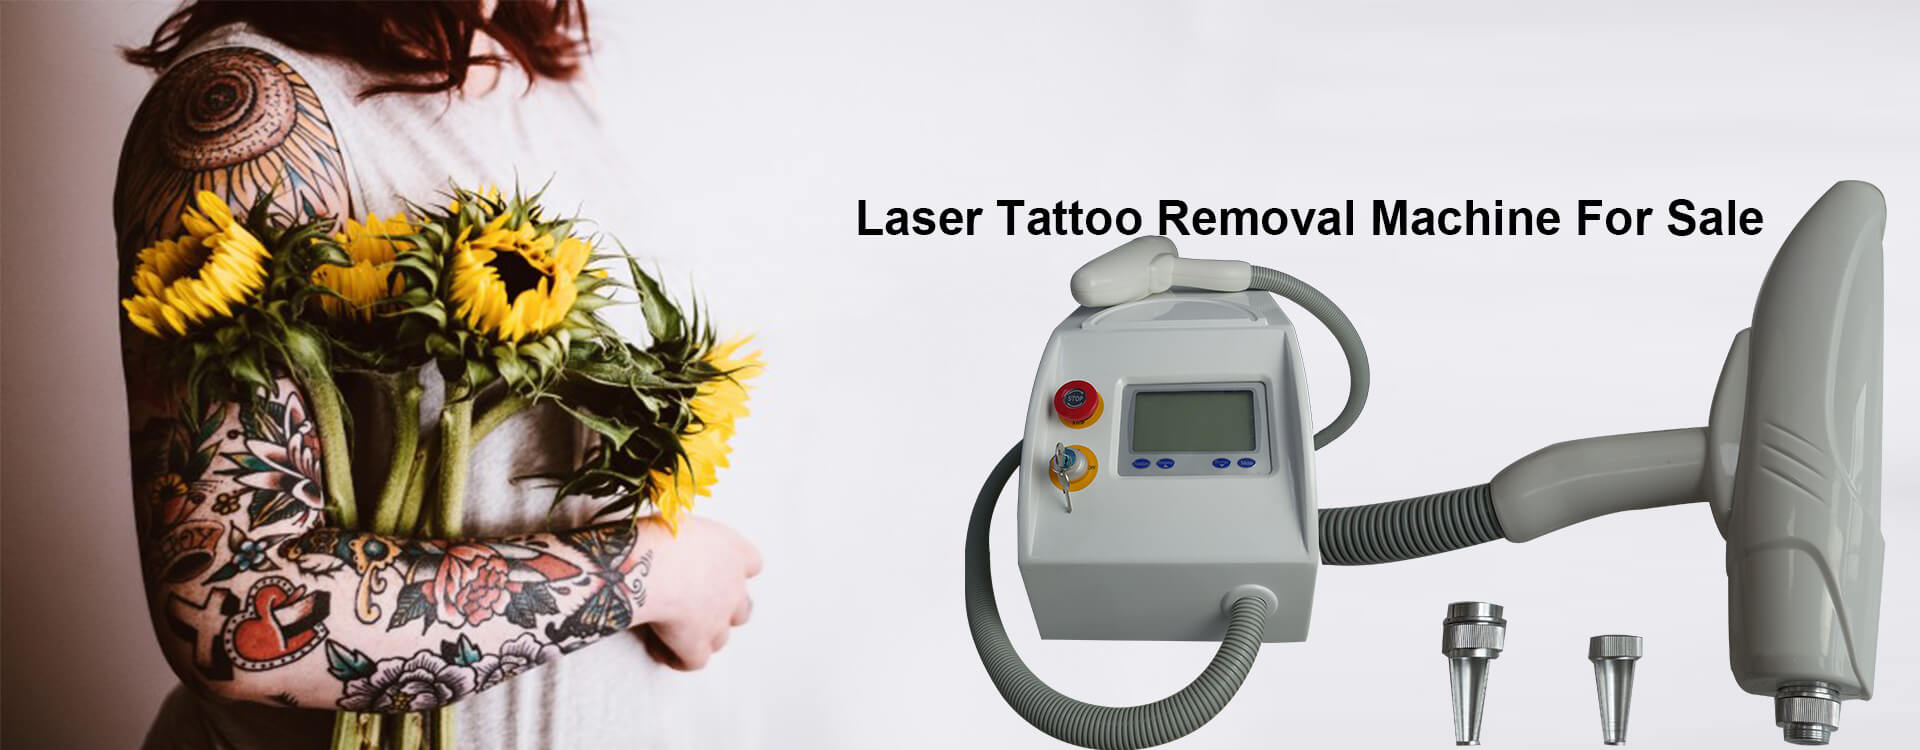 Can Laser Hair Removal Damage Tattoos? - NAAMA Studios